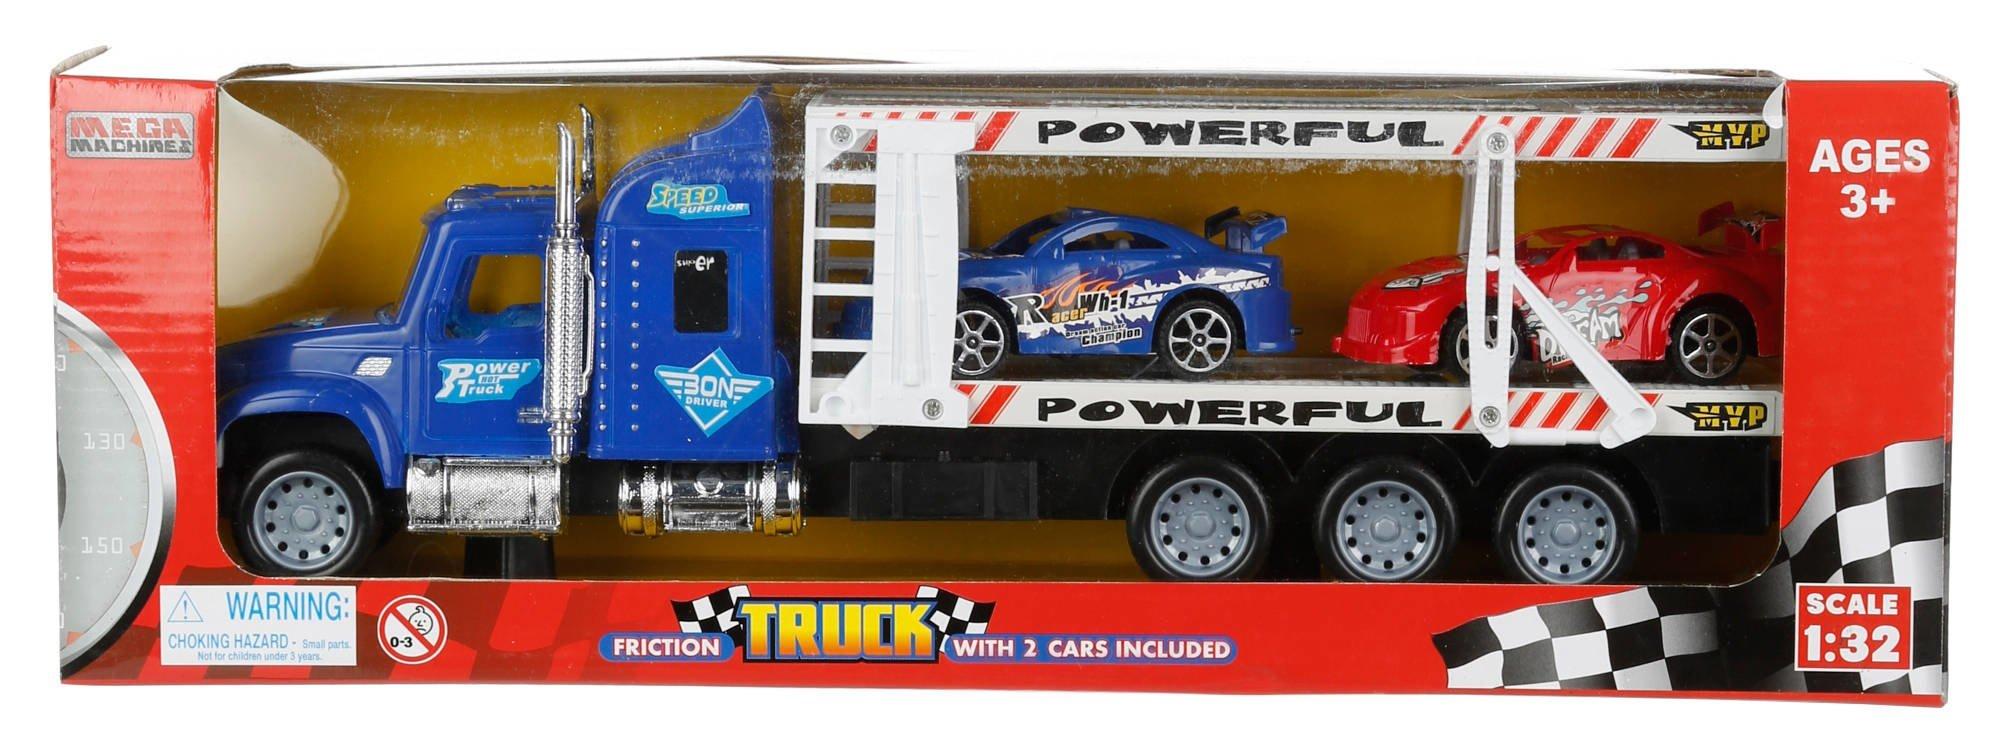 toy semi truck car hauler